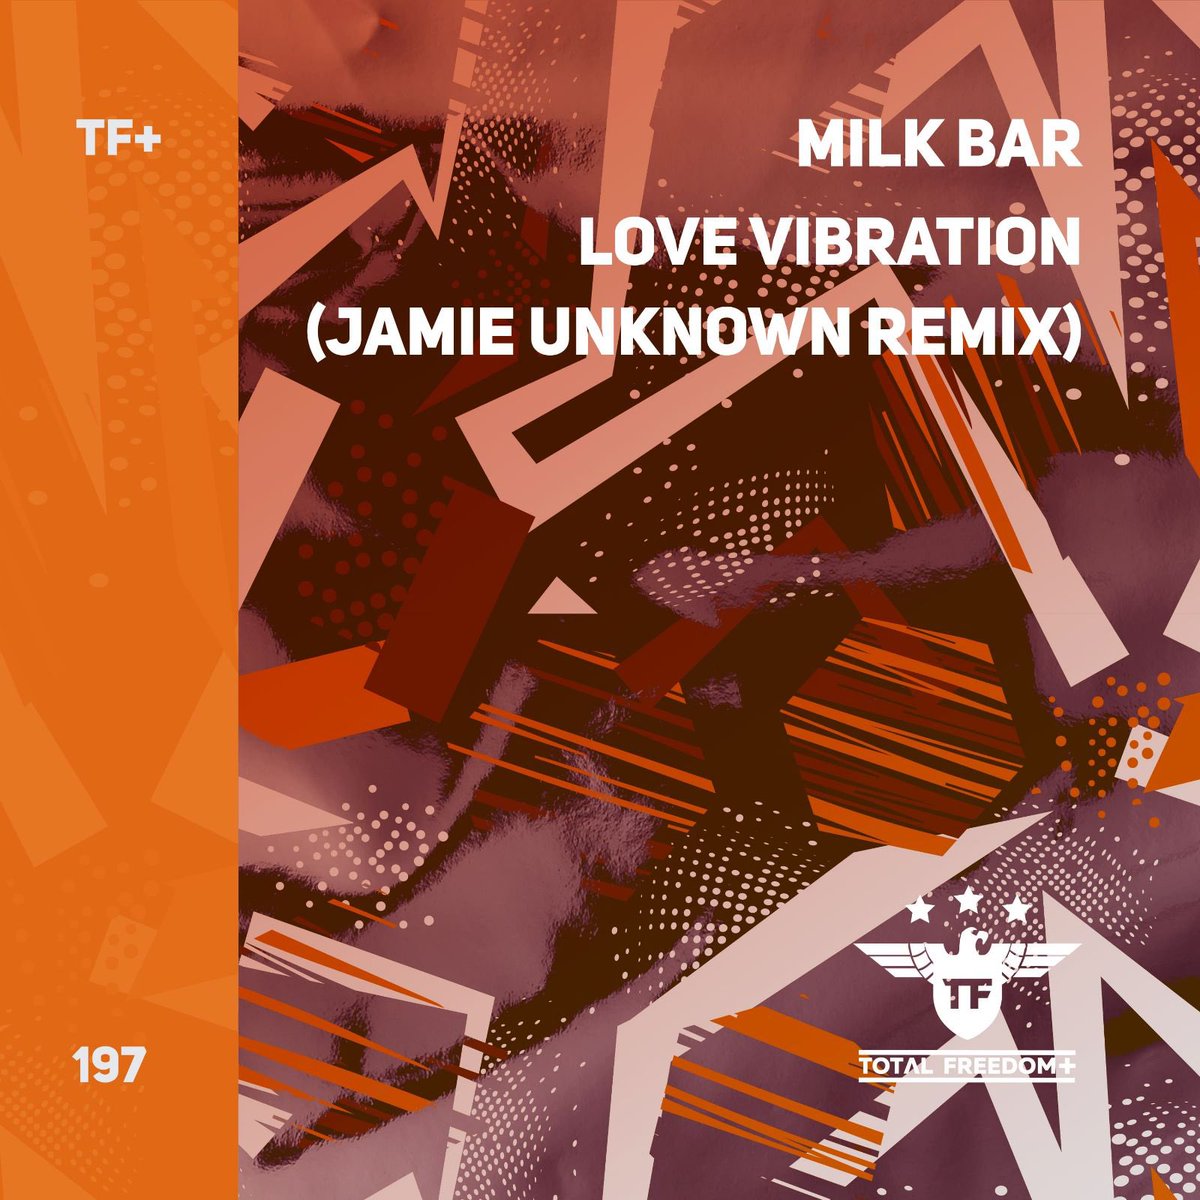 1/2⚡️ OUT NOW! ⚡️#InfectiousFridayPicks biglink.to/iAN3 @fambamusic - Estar Conmigo l @Sony_Music @DjJayRobinson ft. @weareliinks - My Church l @STEREOHYPEgbl #MilkBar - Love Vibration (#JamieUnknown Remix) l #TotalFreedom